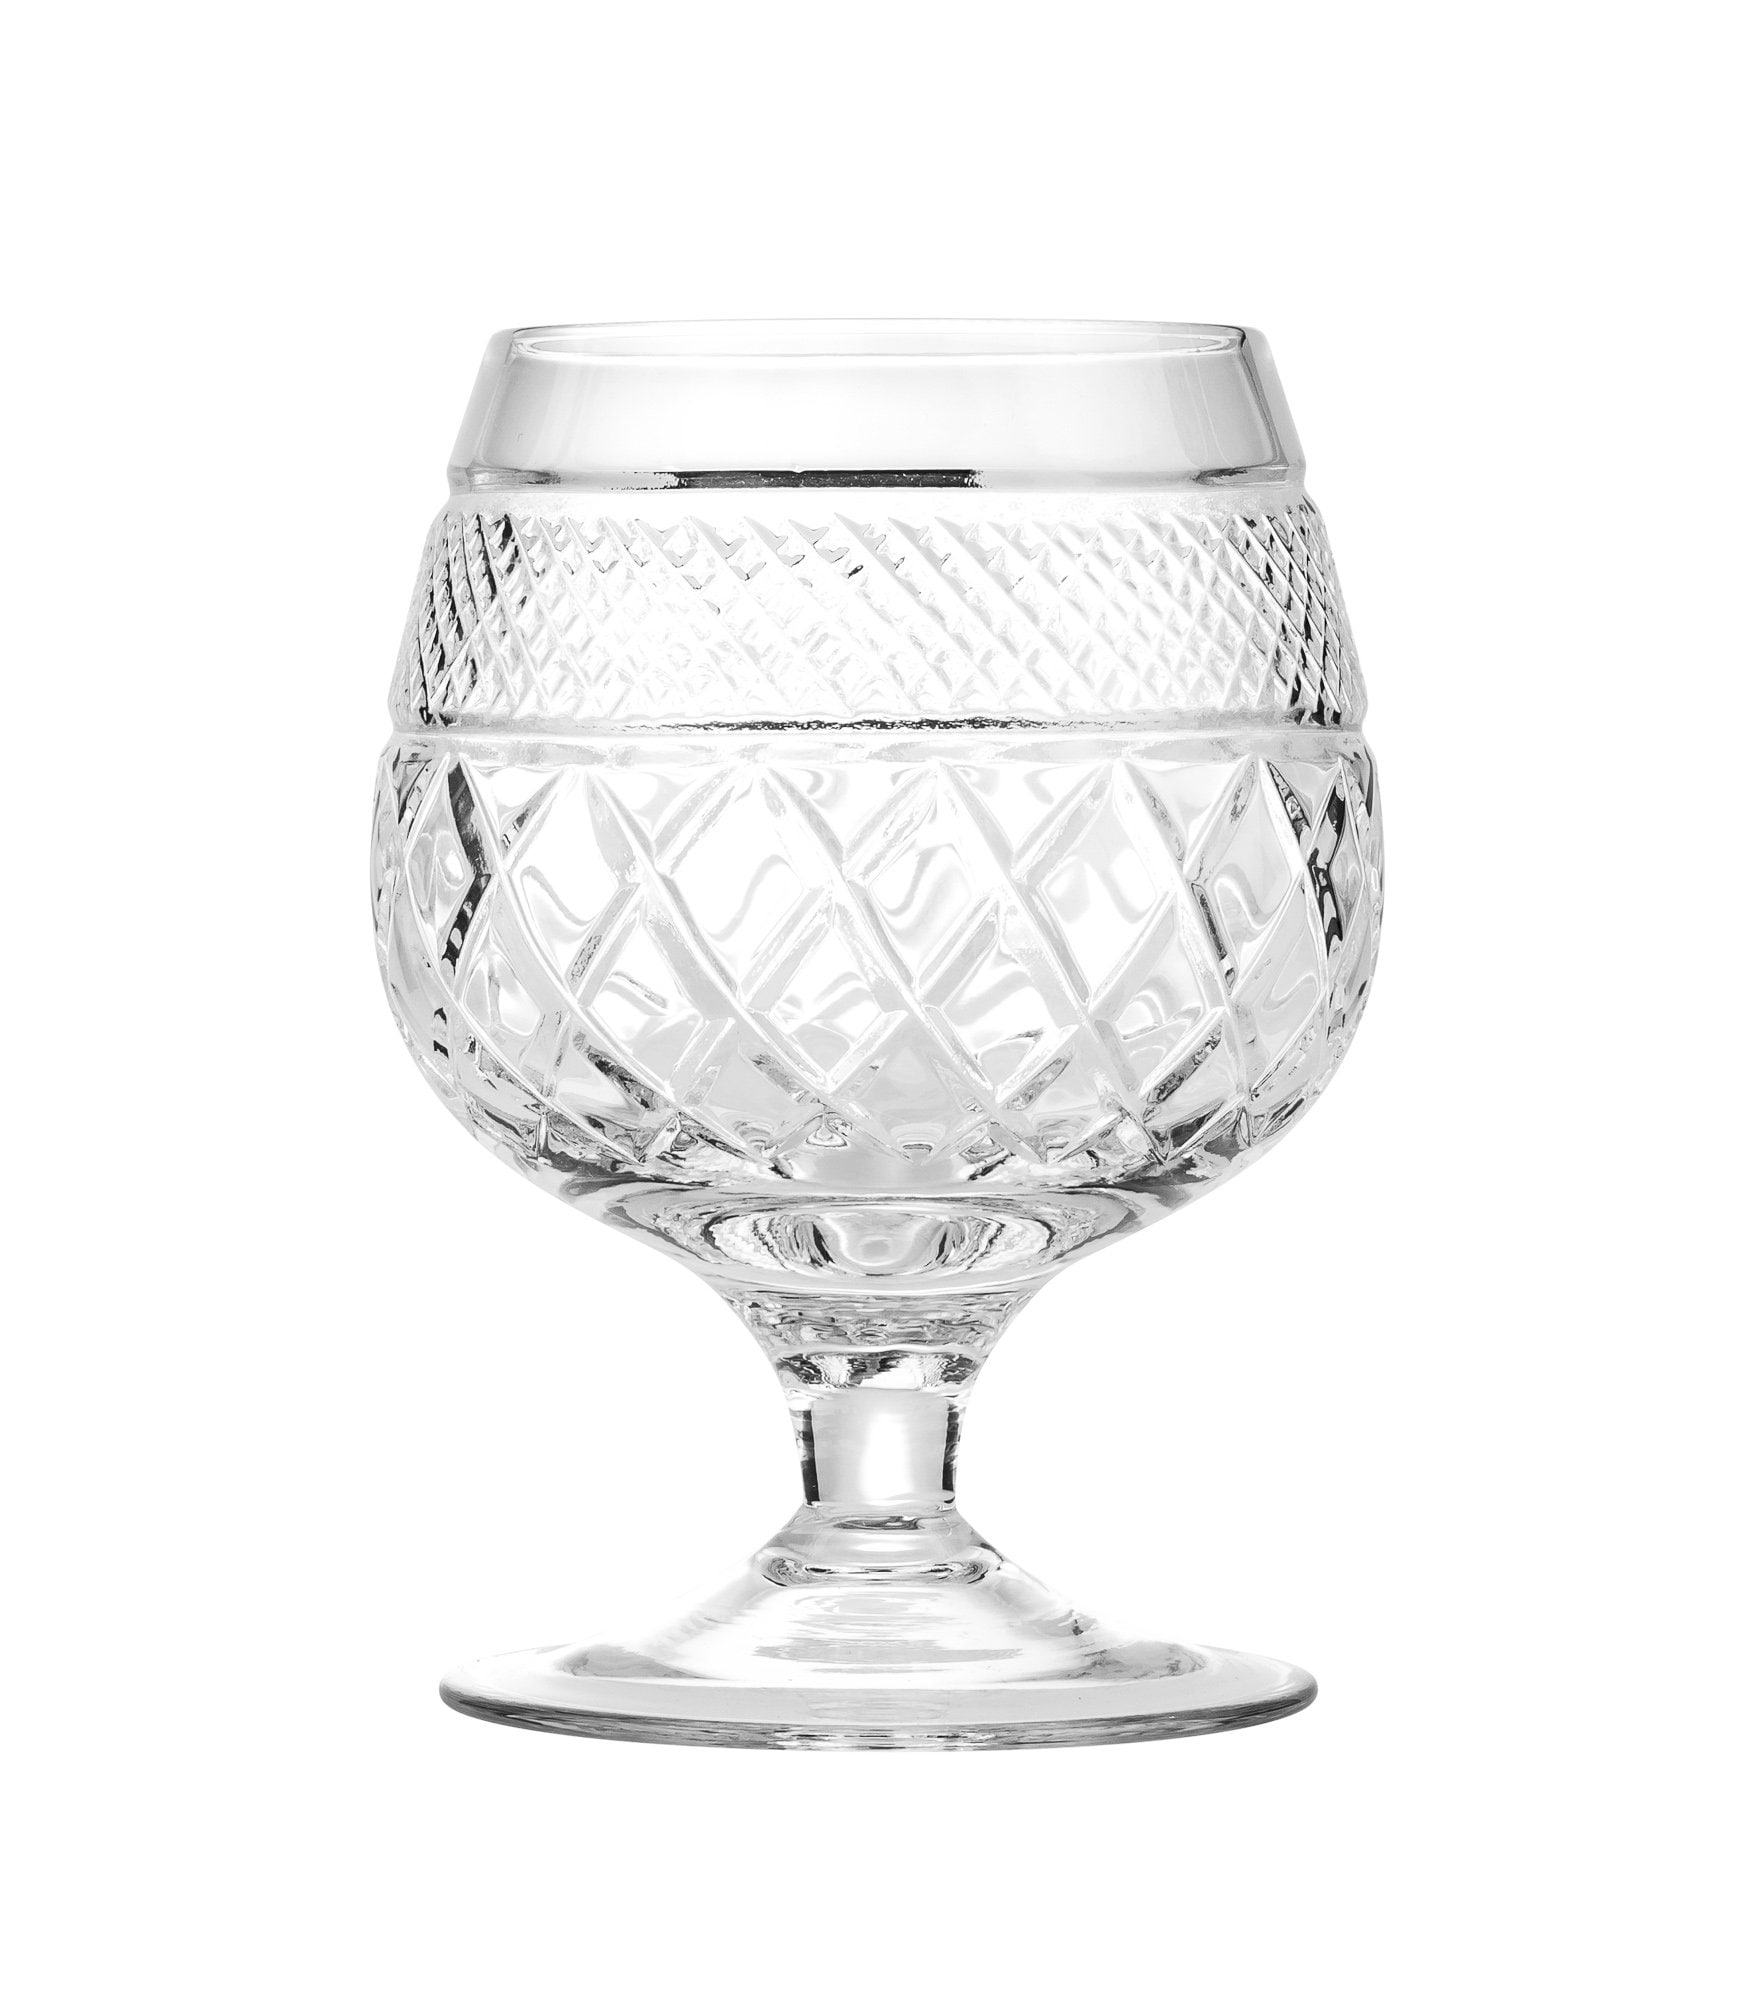 Neman 7' Brandy Snifter Glass With Gold Rim, Hand-cut Crystal